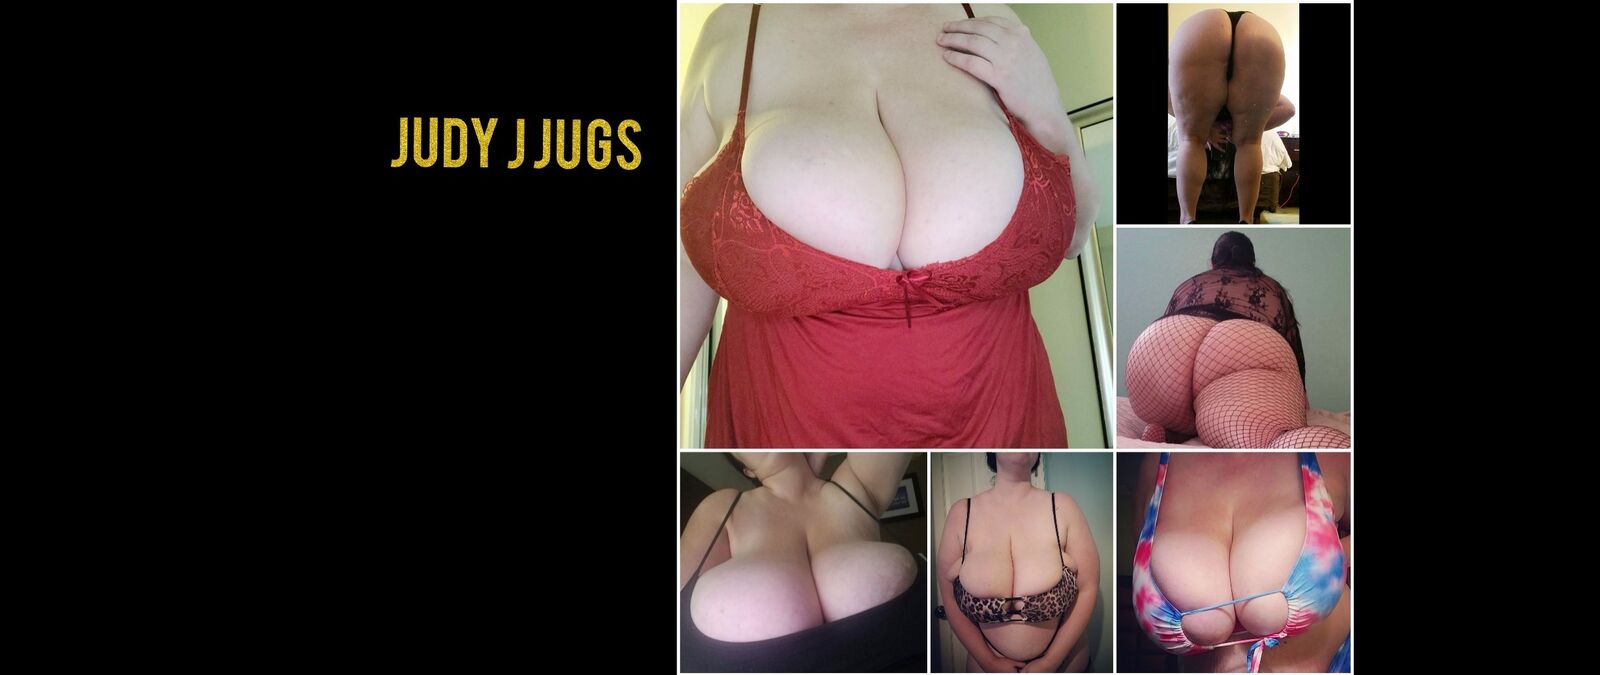 See 40P titties 🍒  Judy Jugs profile